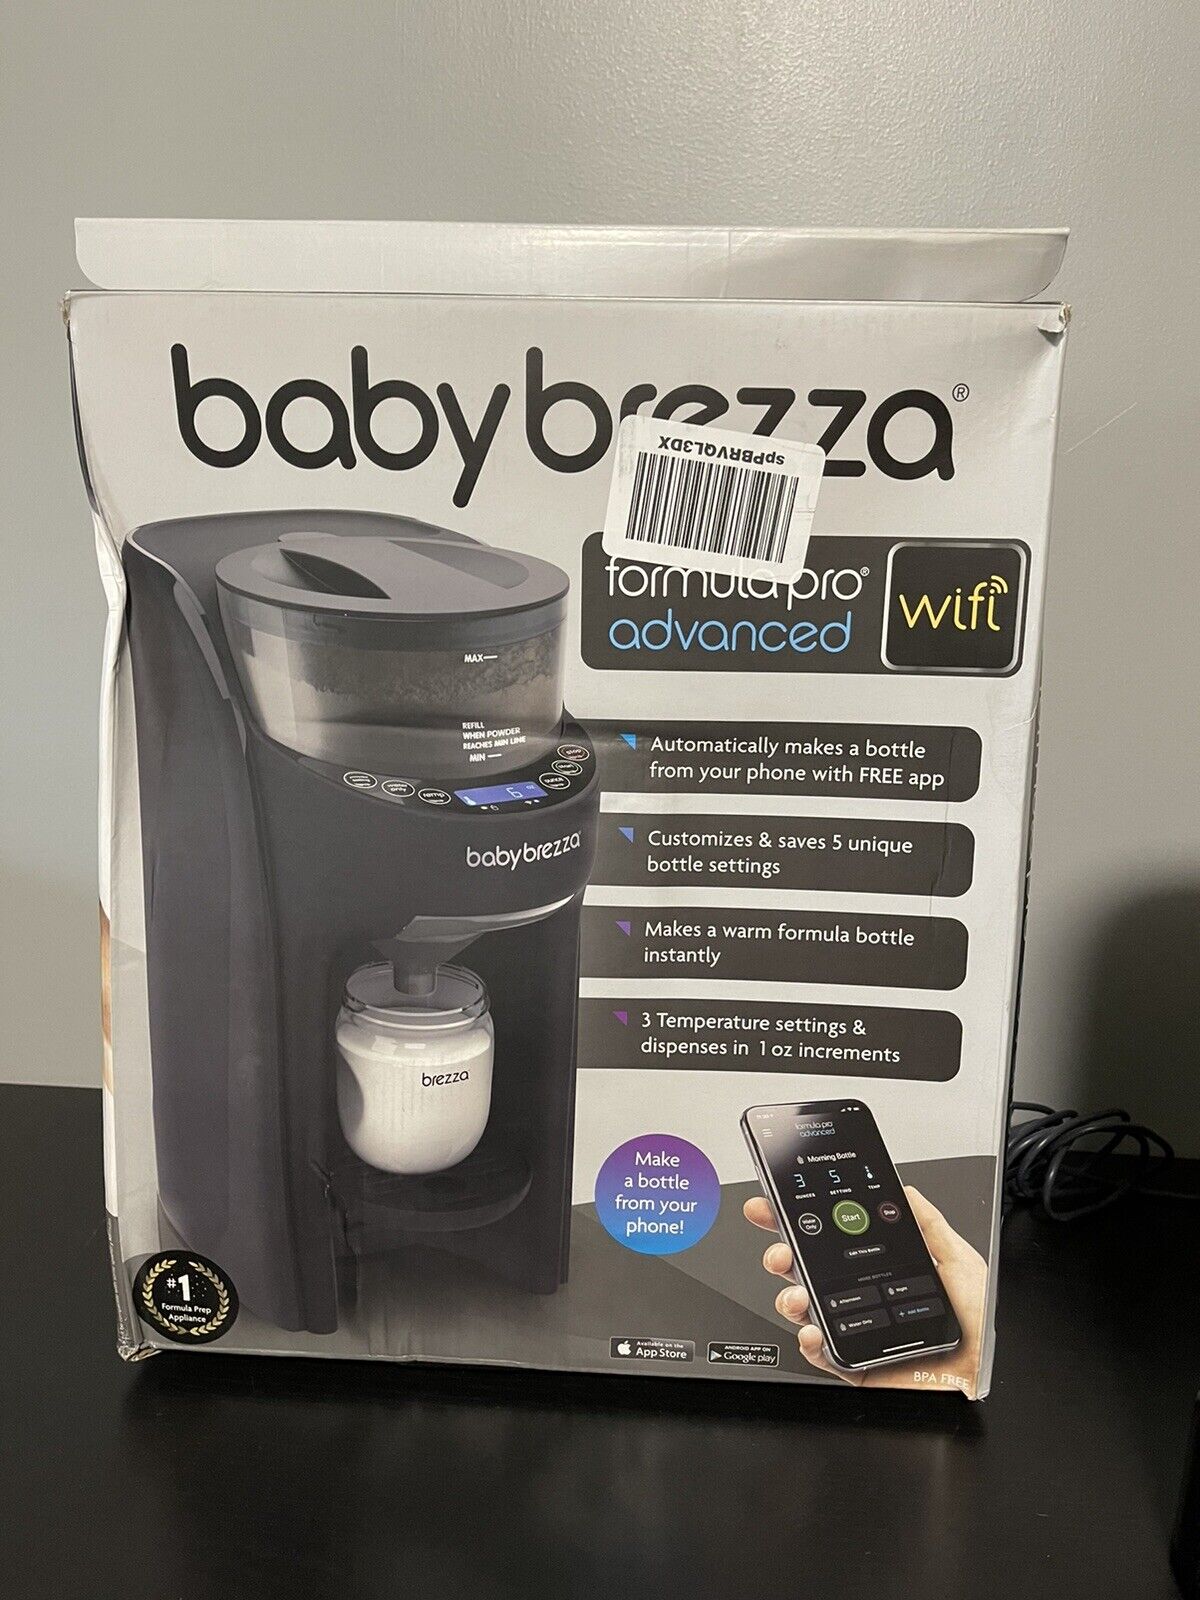 Baby Brezza - Formula Pro Advanced Mixing System Wifi - Black (ripped Manual)